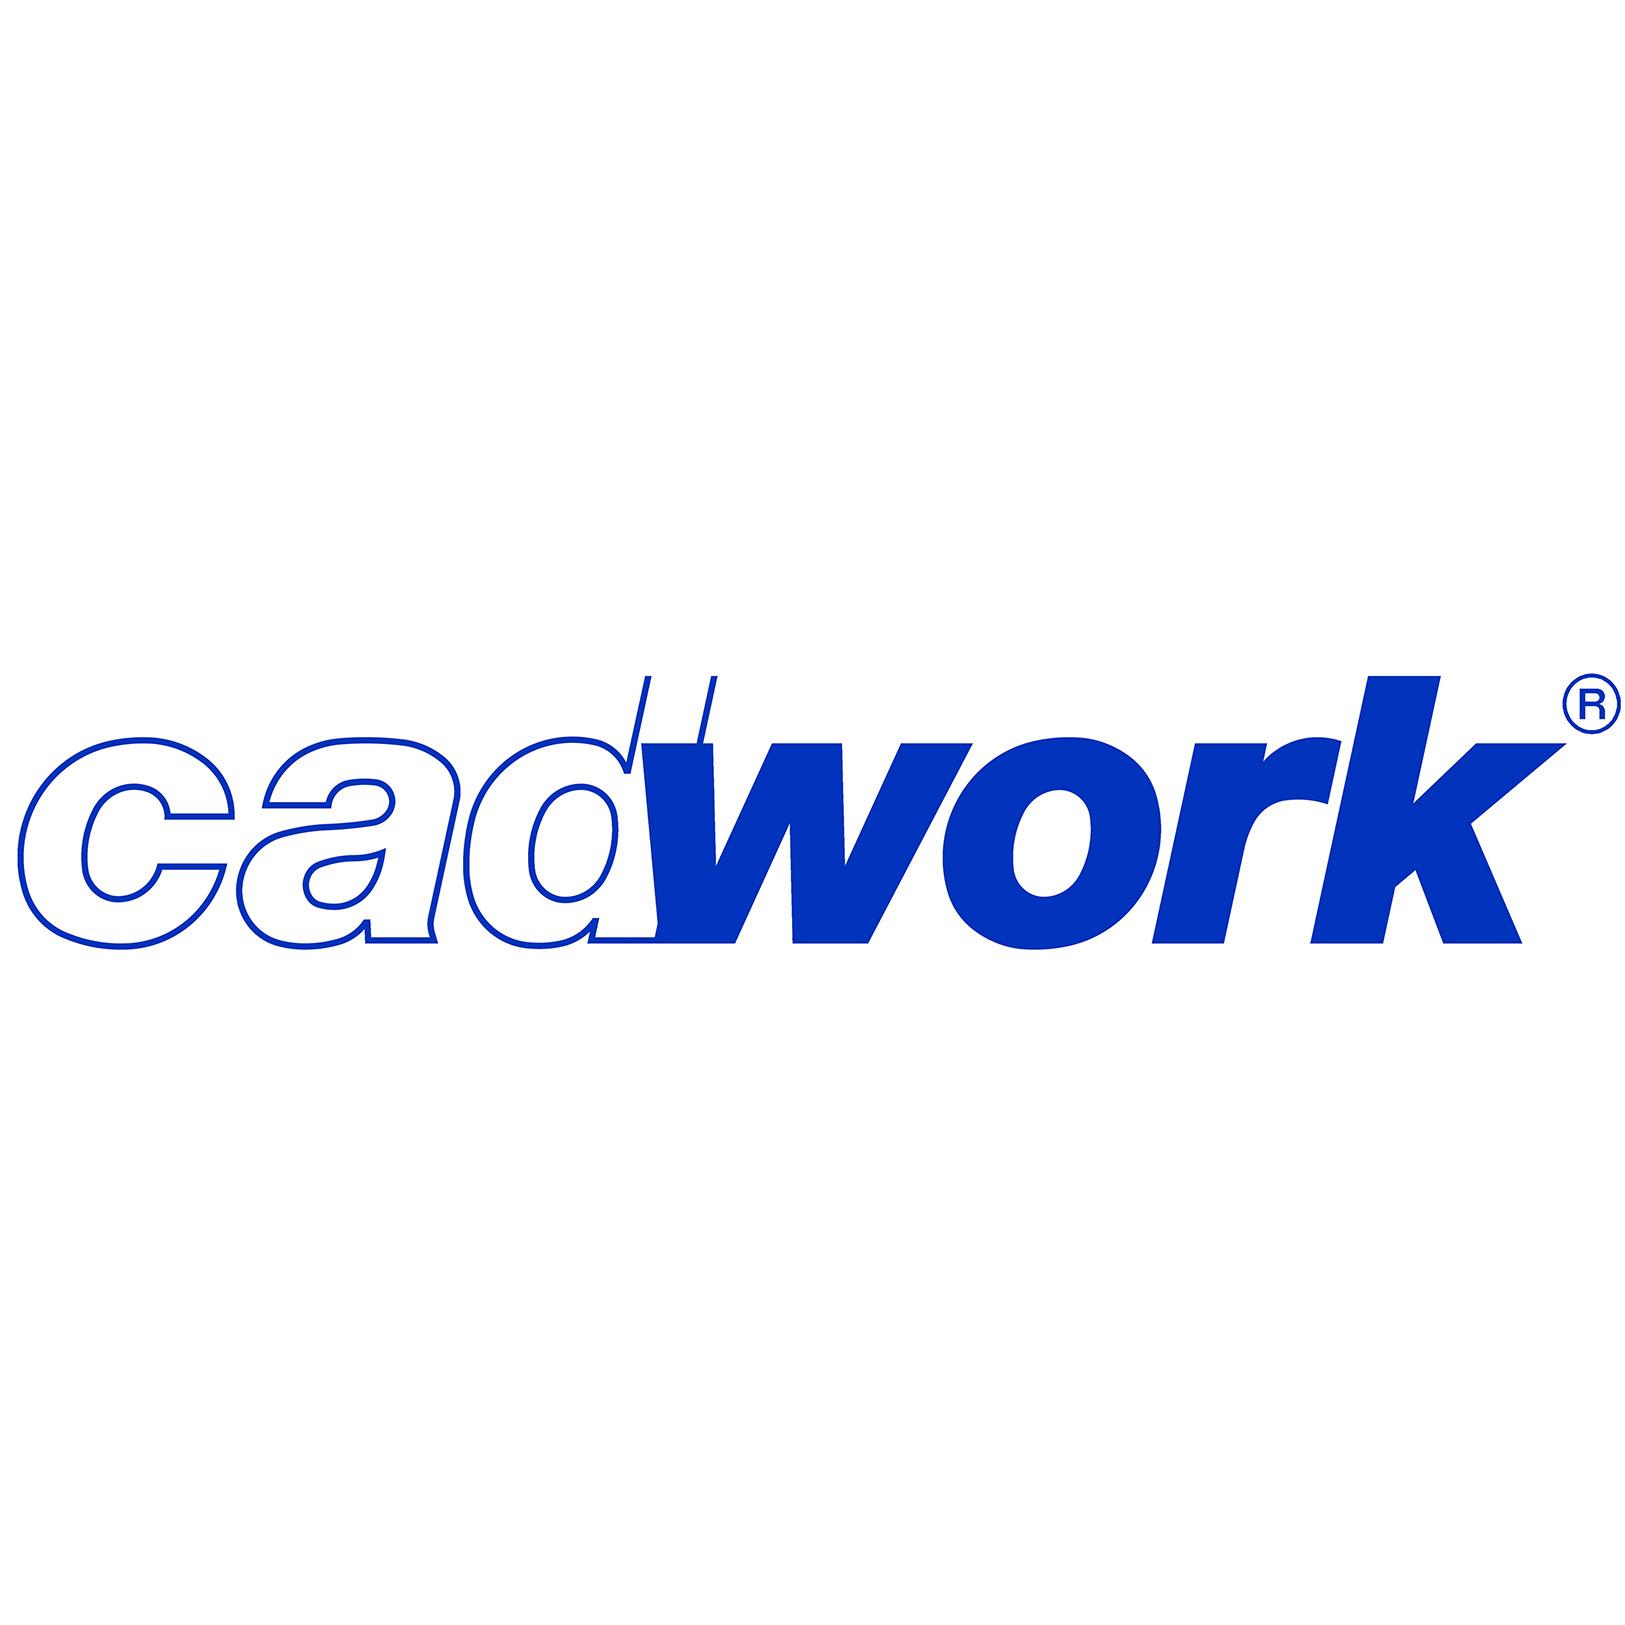 Logo Cadwork